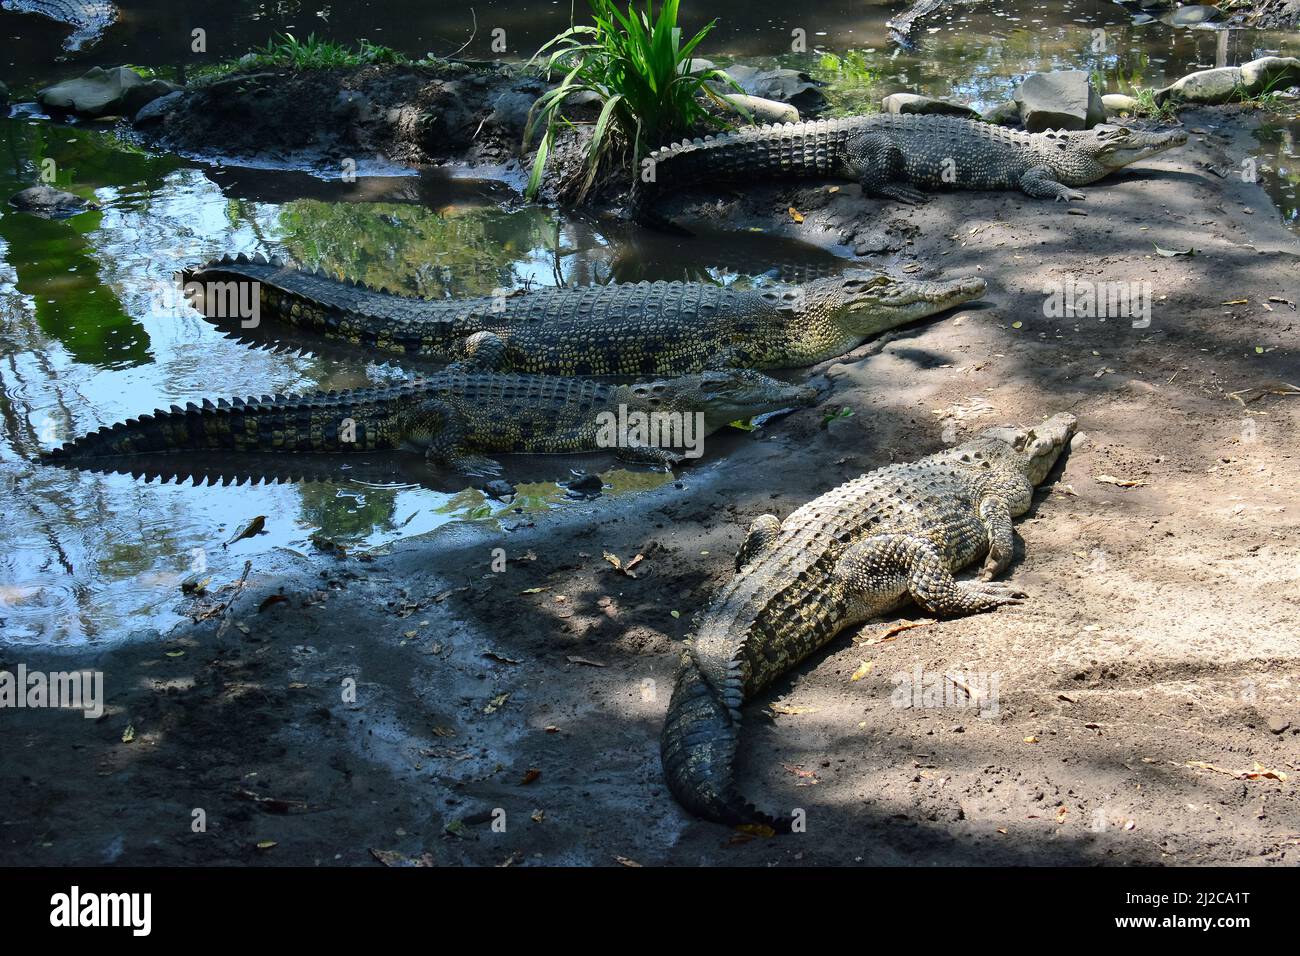 Cocodrilo de agua salada, Leistenkrokodil, Crocodylus porosus, Gembira Loka Zoo, Yogyakarta, Java, Indonesia, Asia Foto de stock